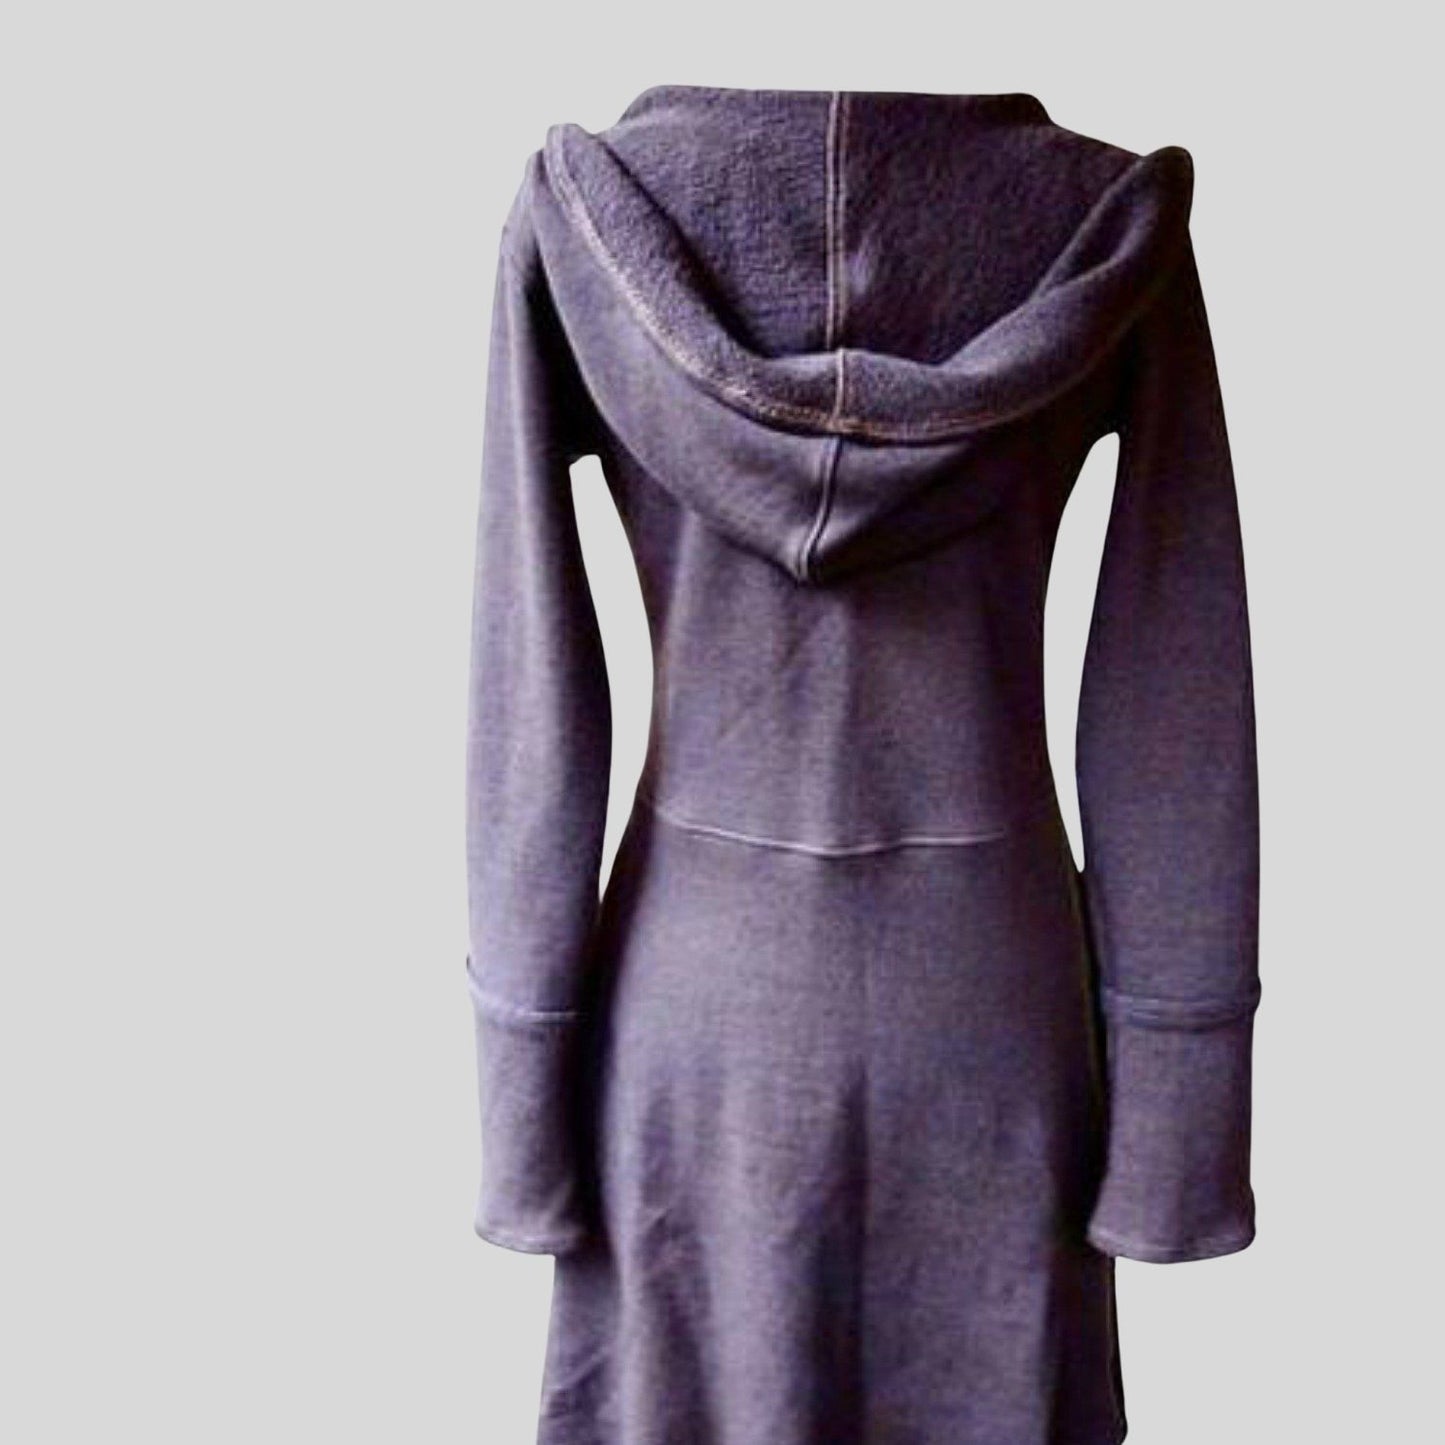 Hooded tunic dress